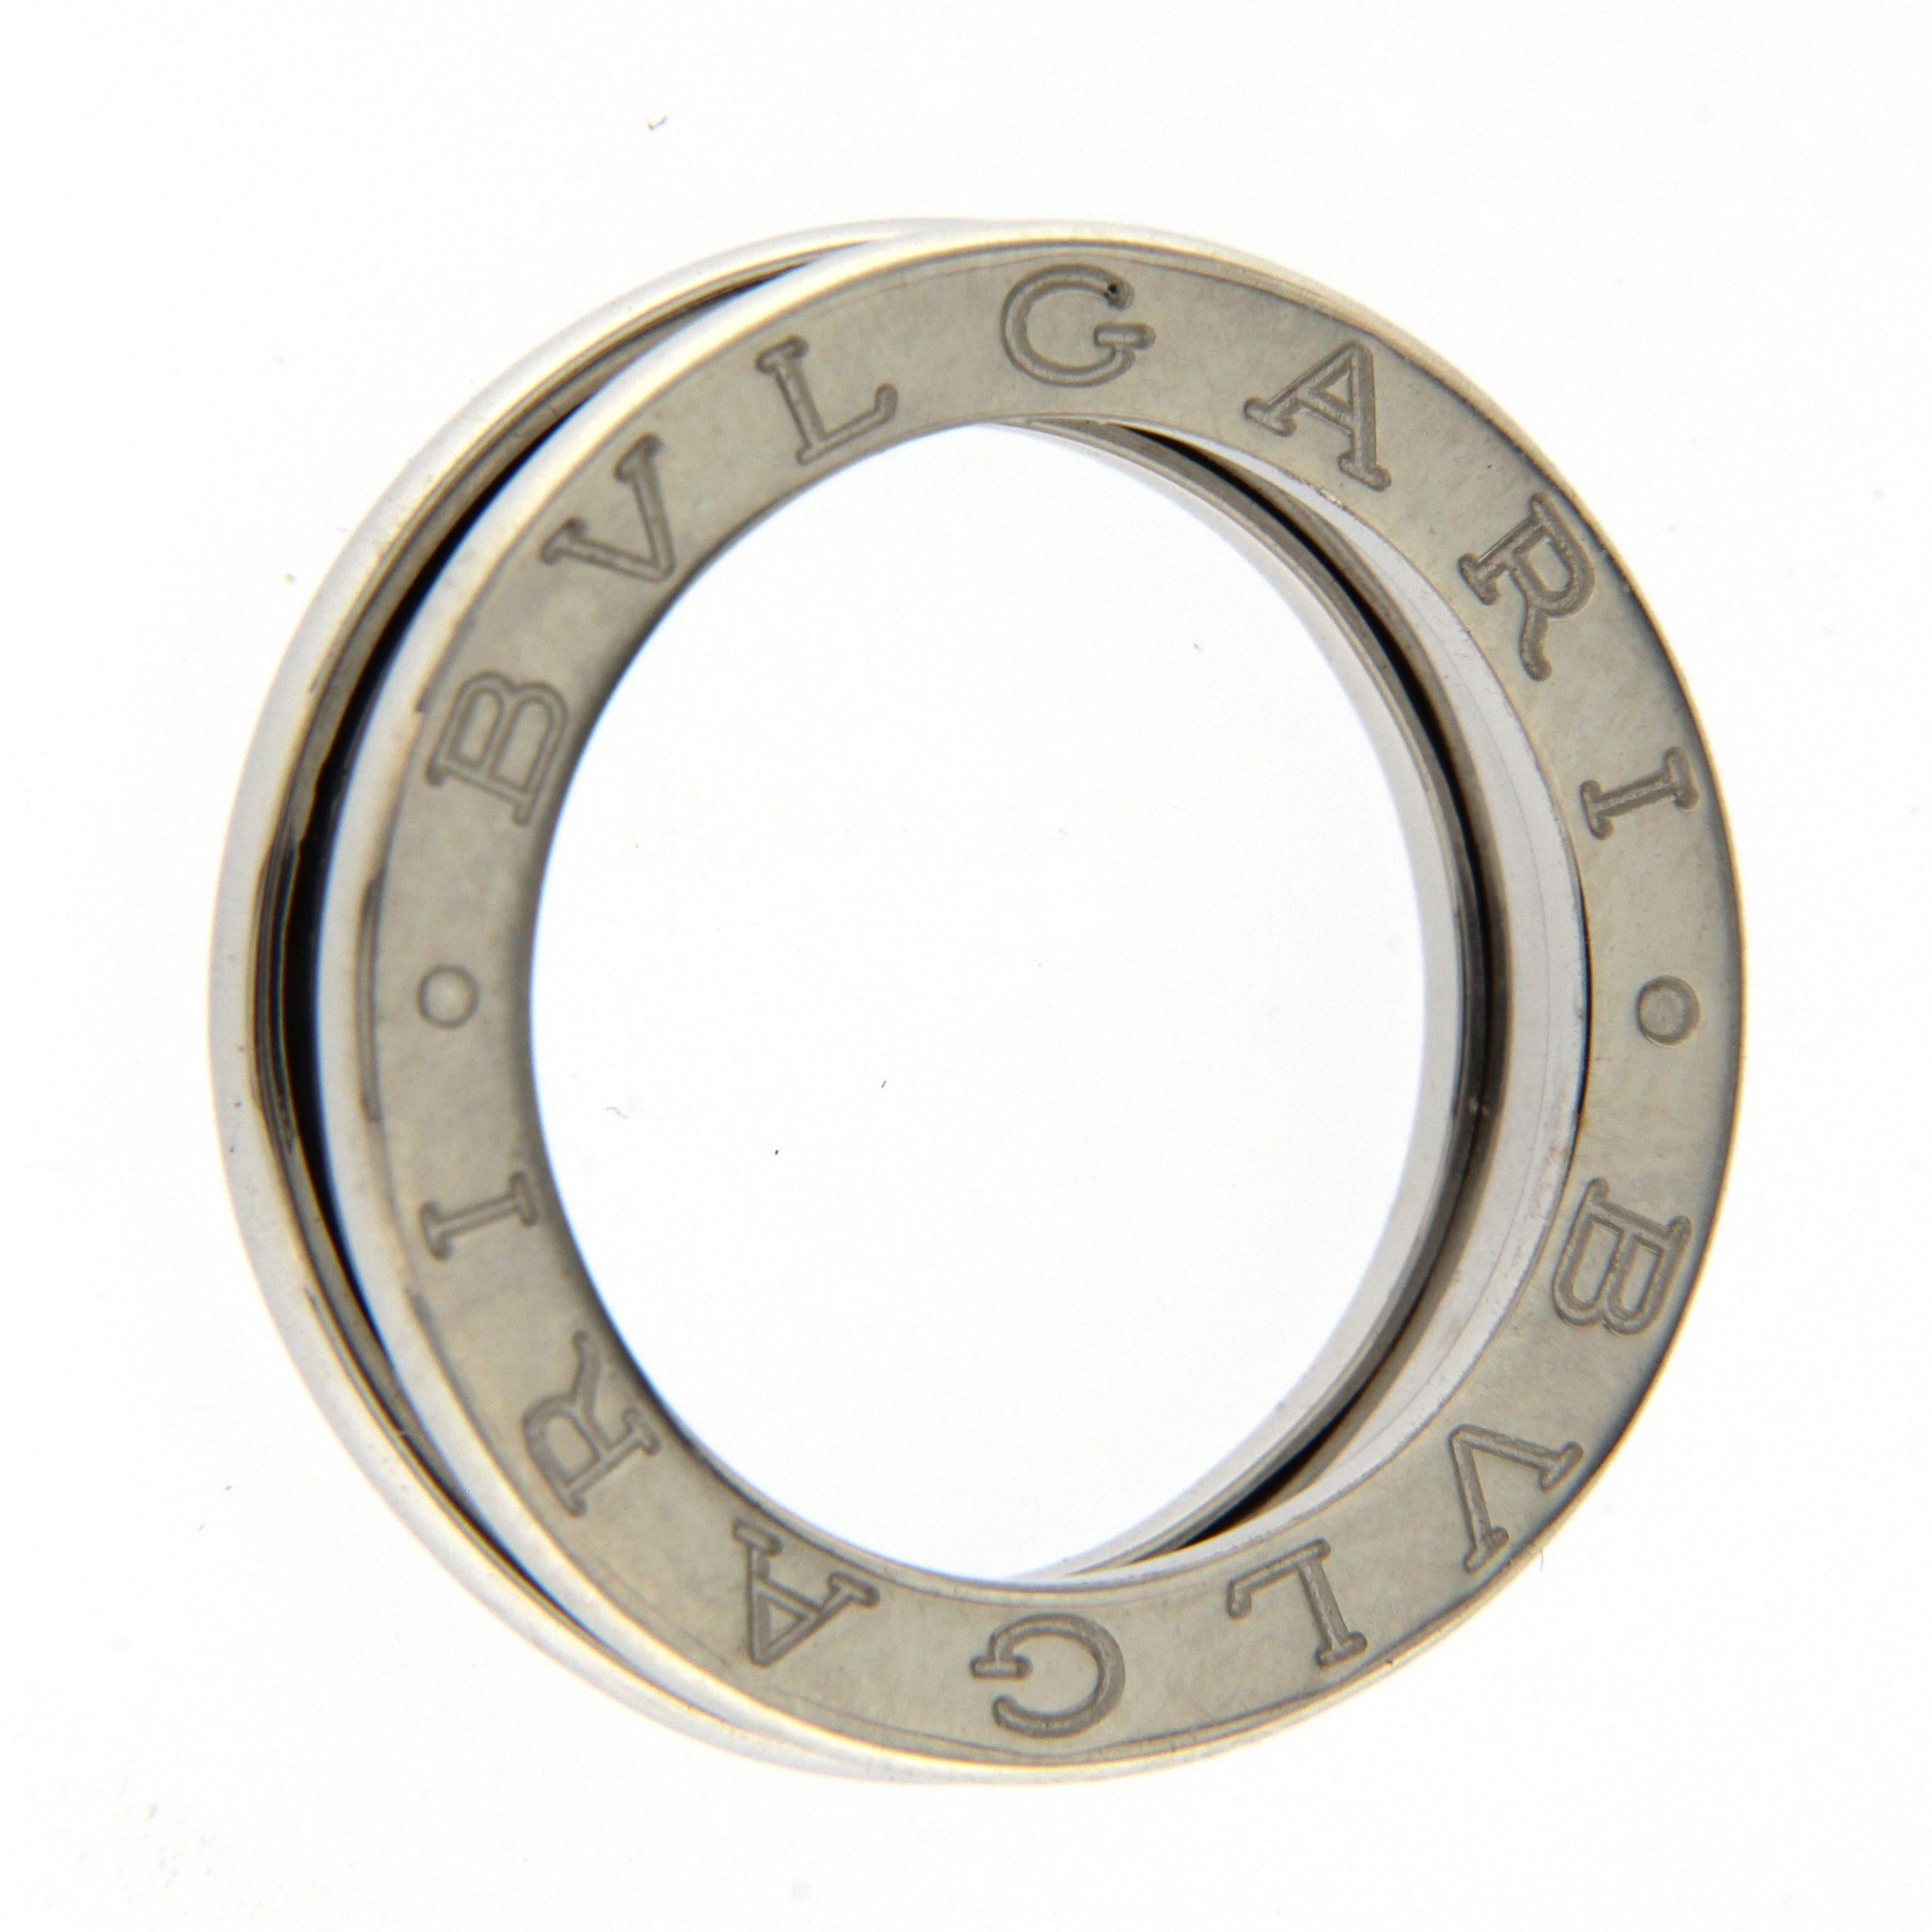 BZERO1 ring 18kt white gold       size 52       1 Band